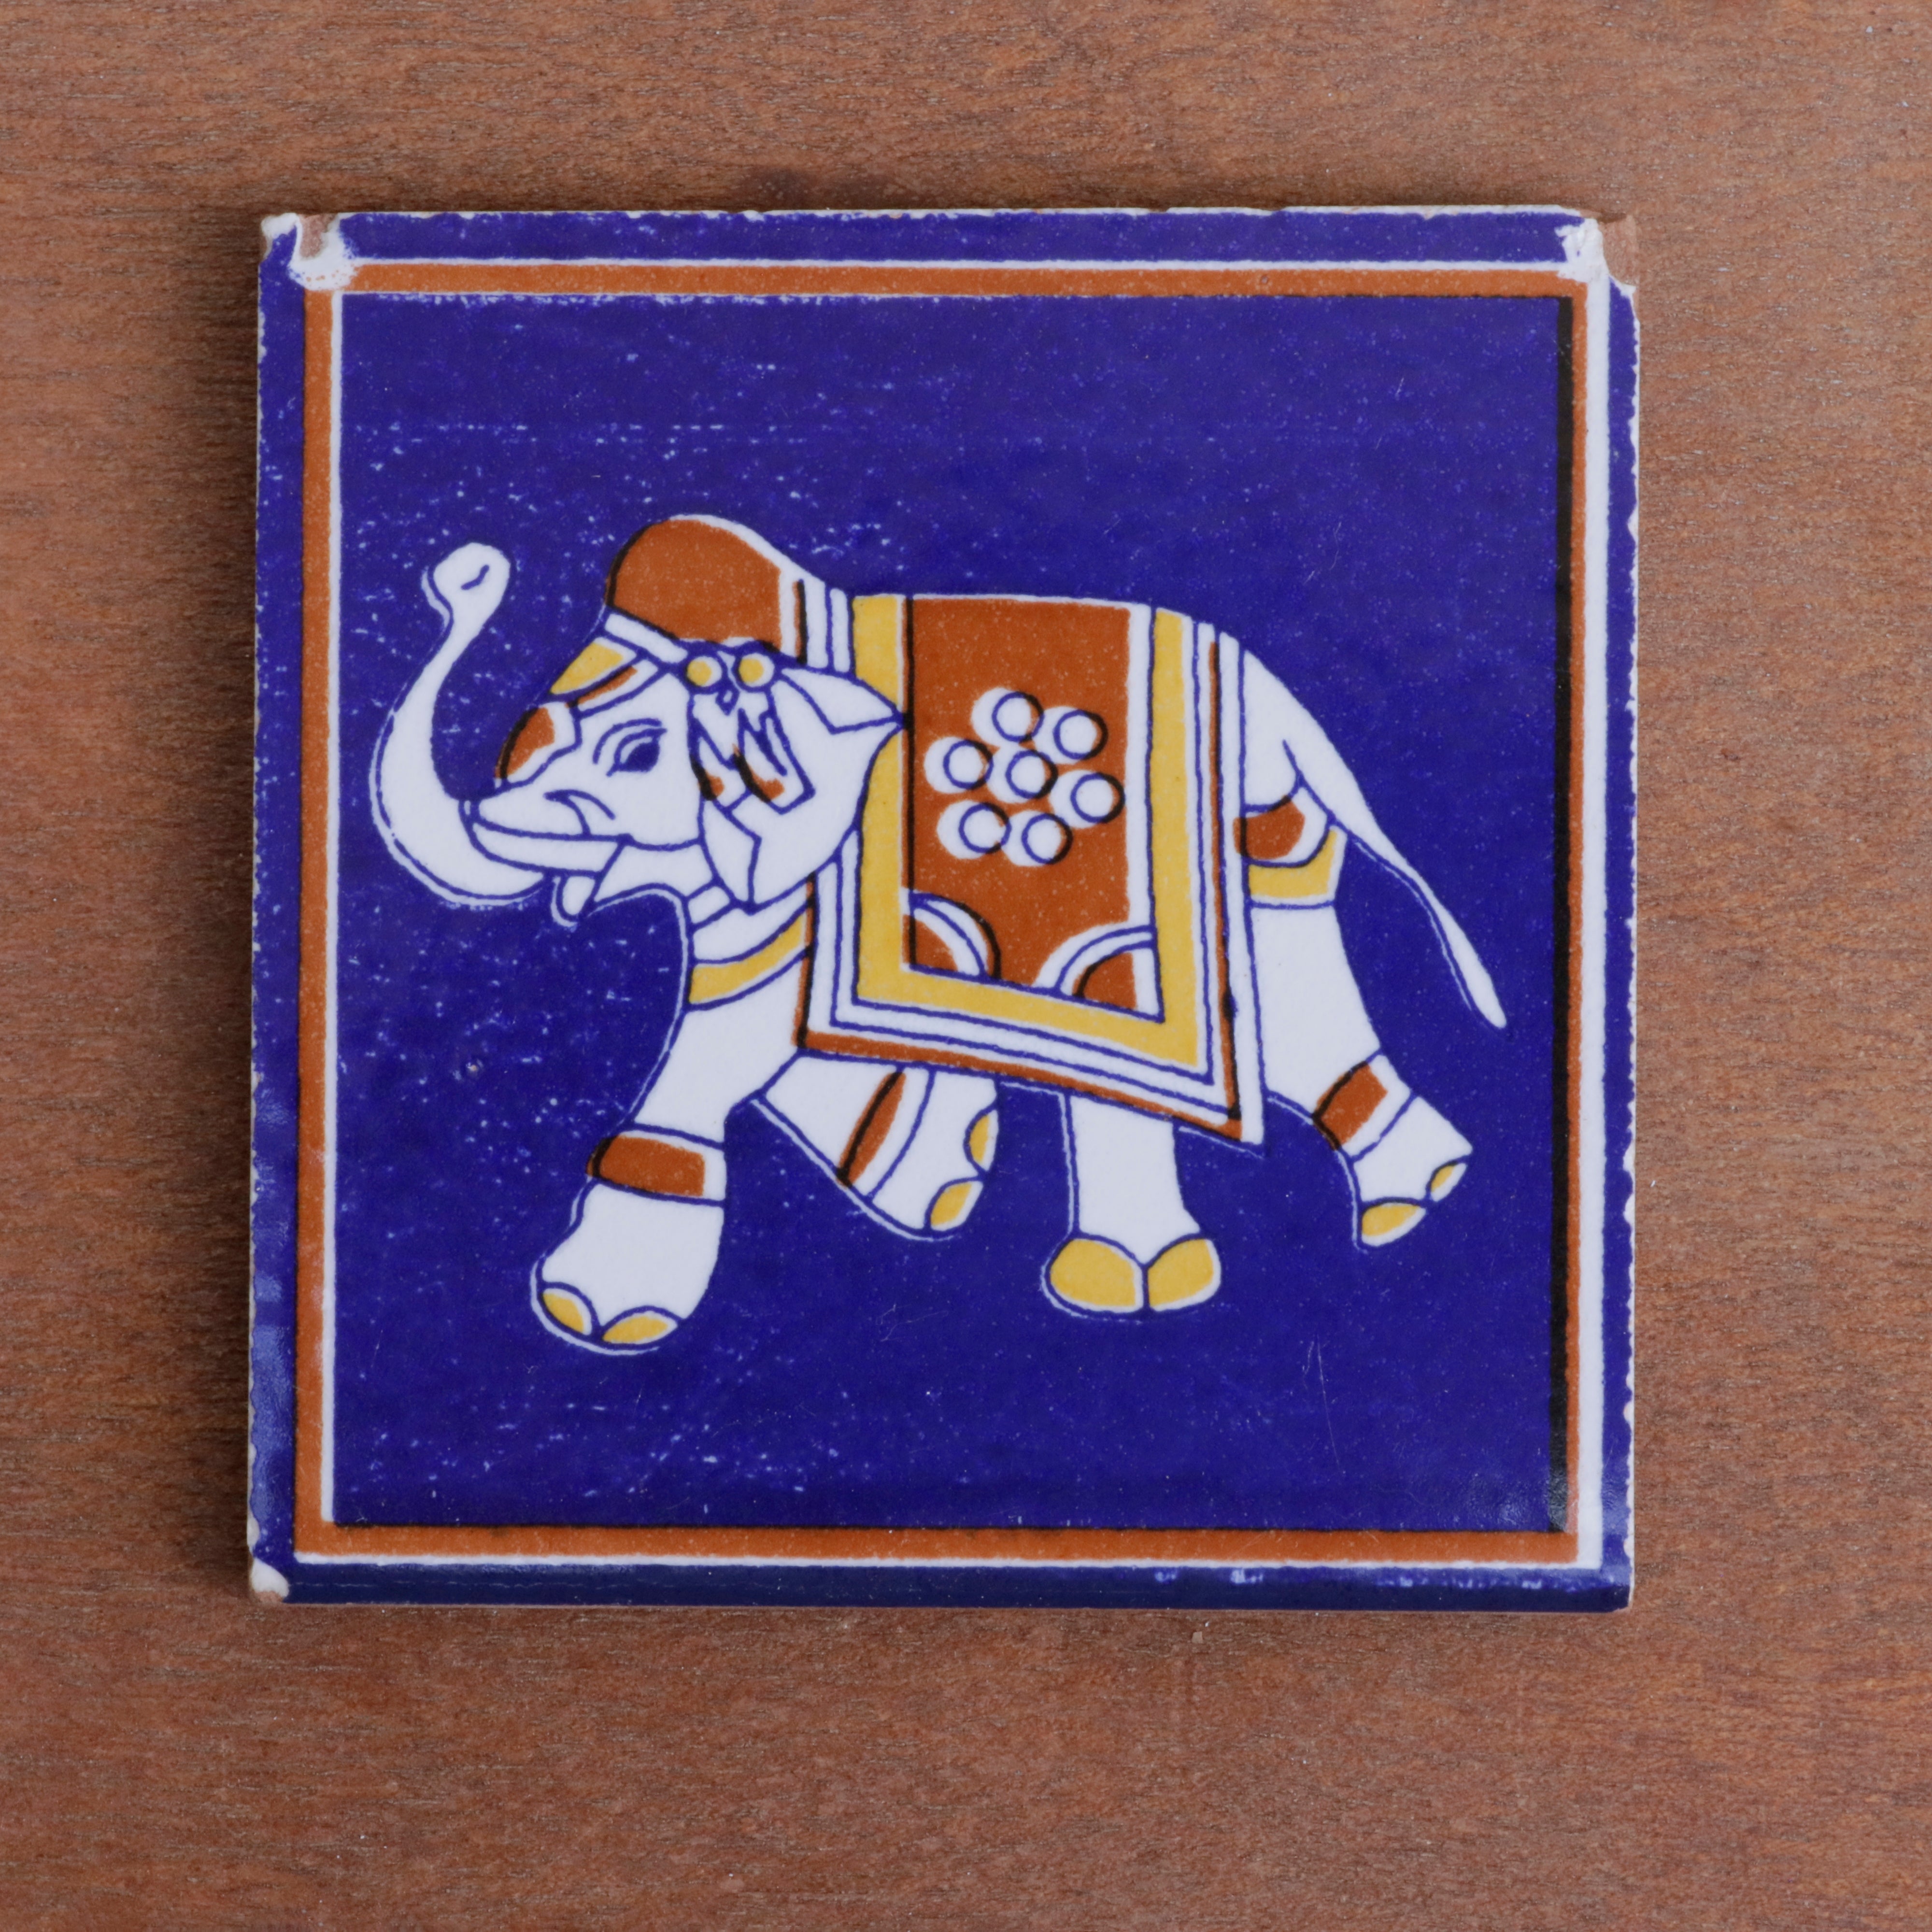 Classic Majestic Elephant Designed Ceramic Square Tile Set of 2 Ceramic Tile